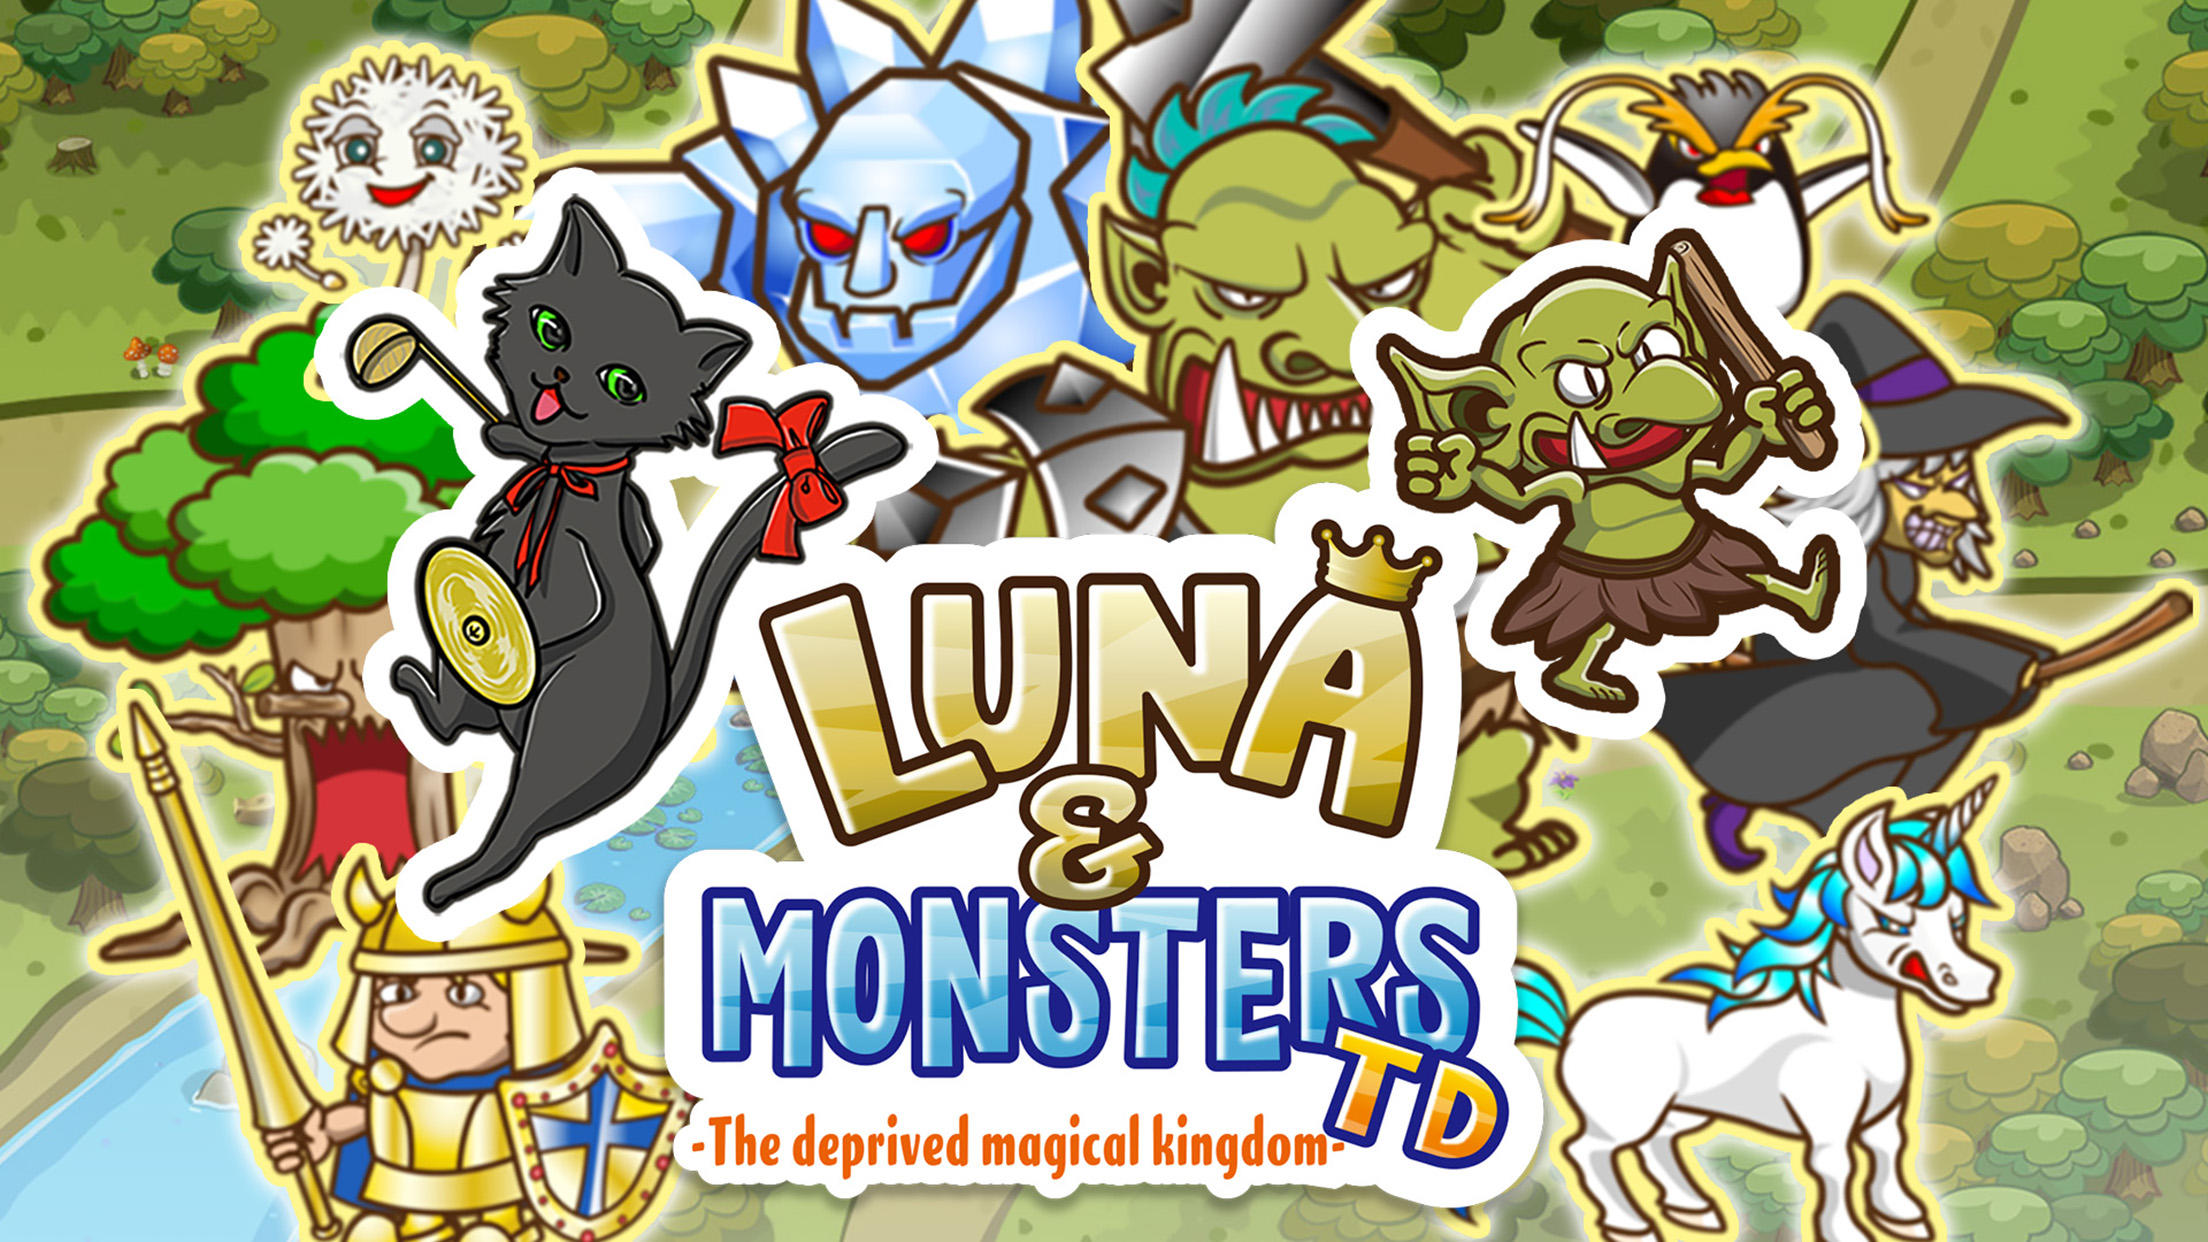 Screenshot 1 of Luna & Monsters หอคอยกลาโหม 